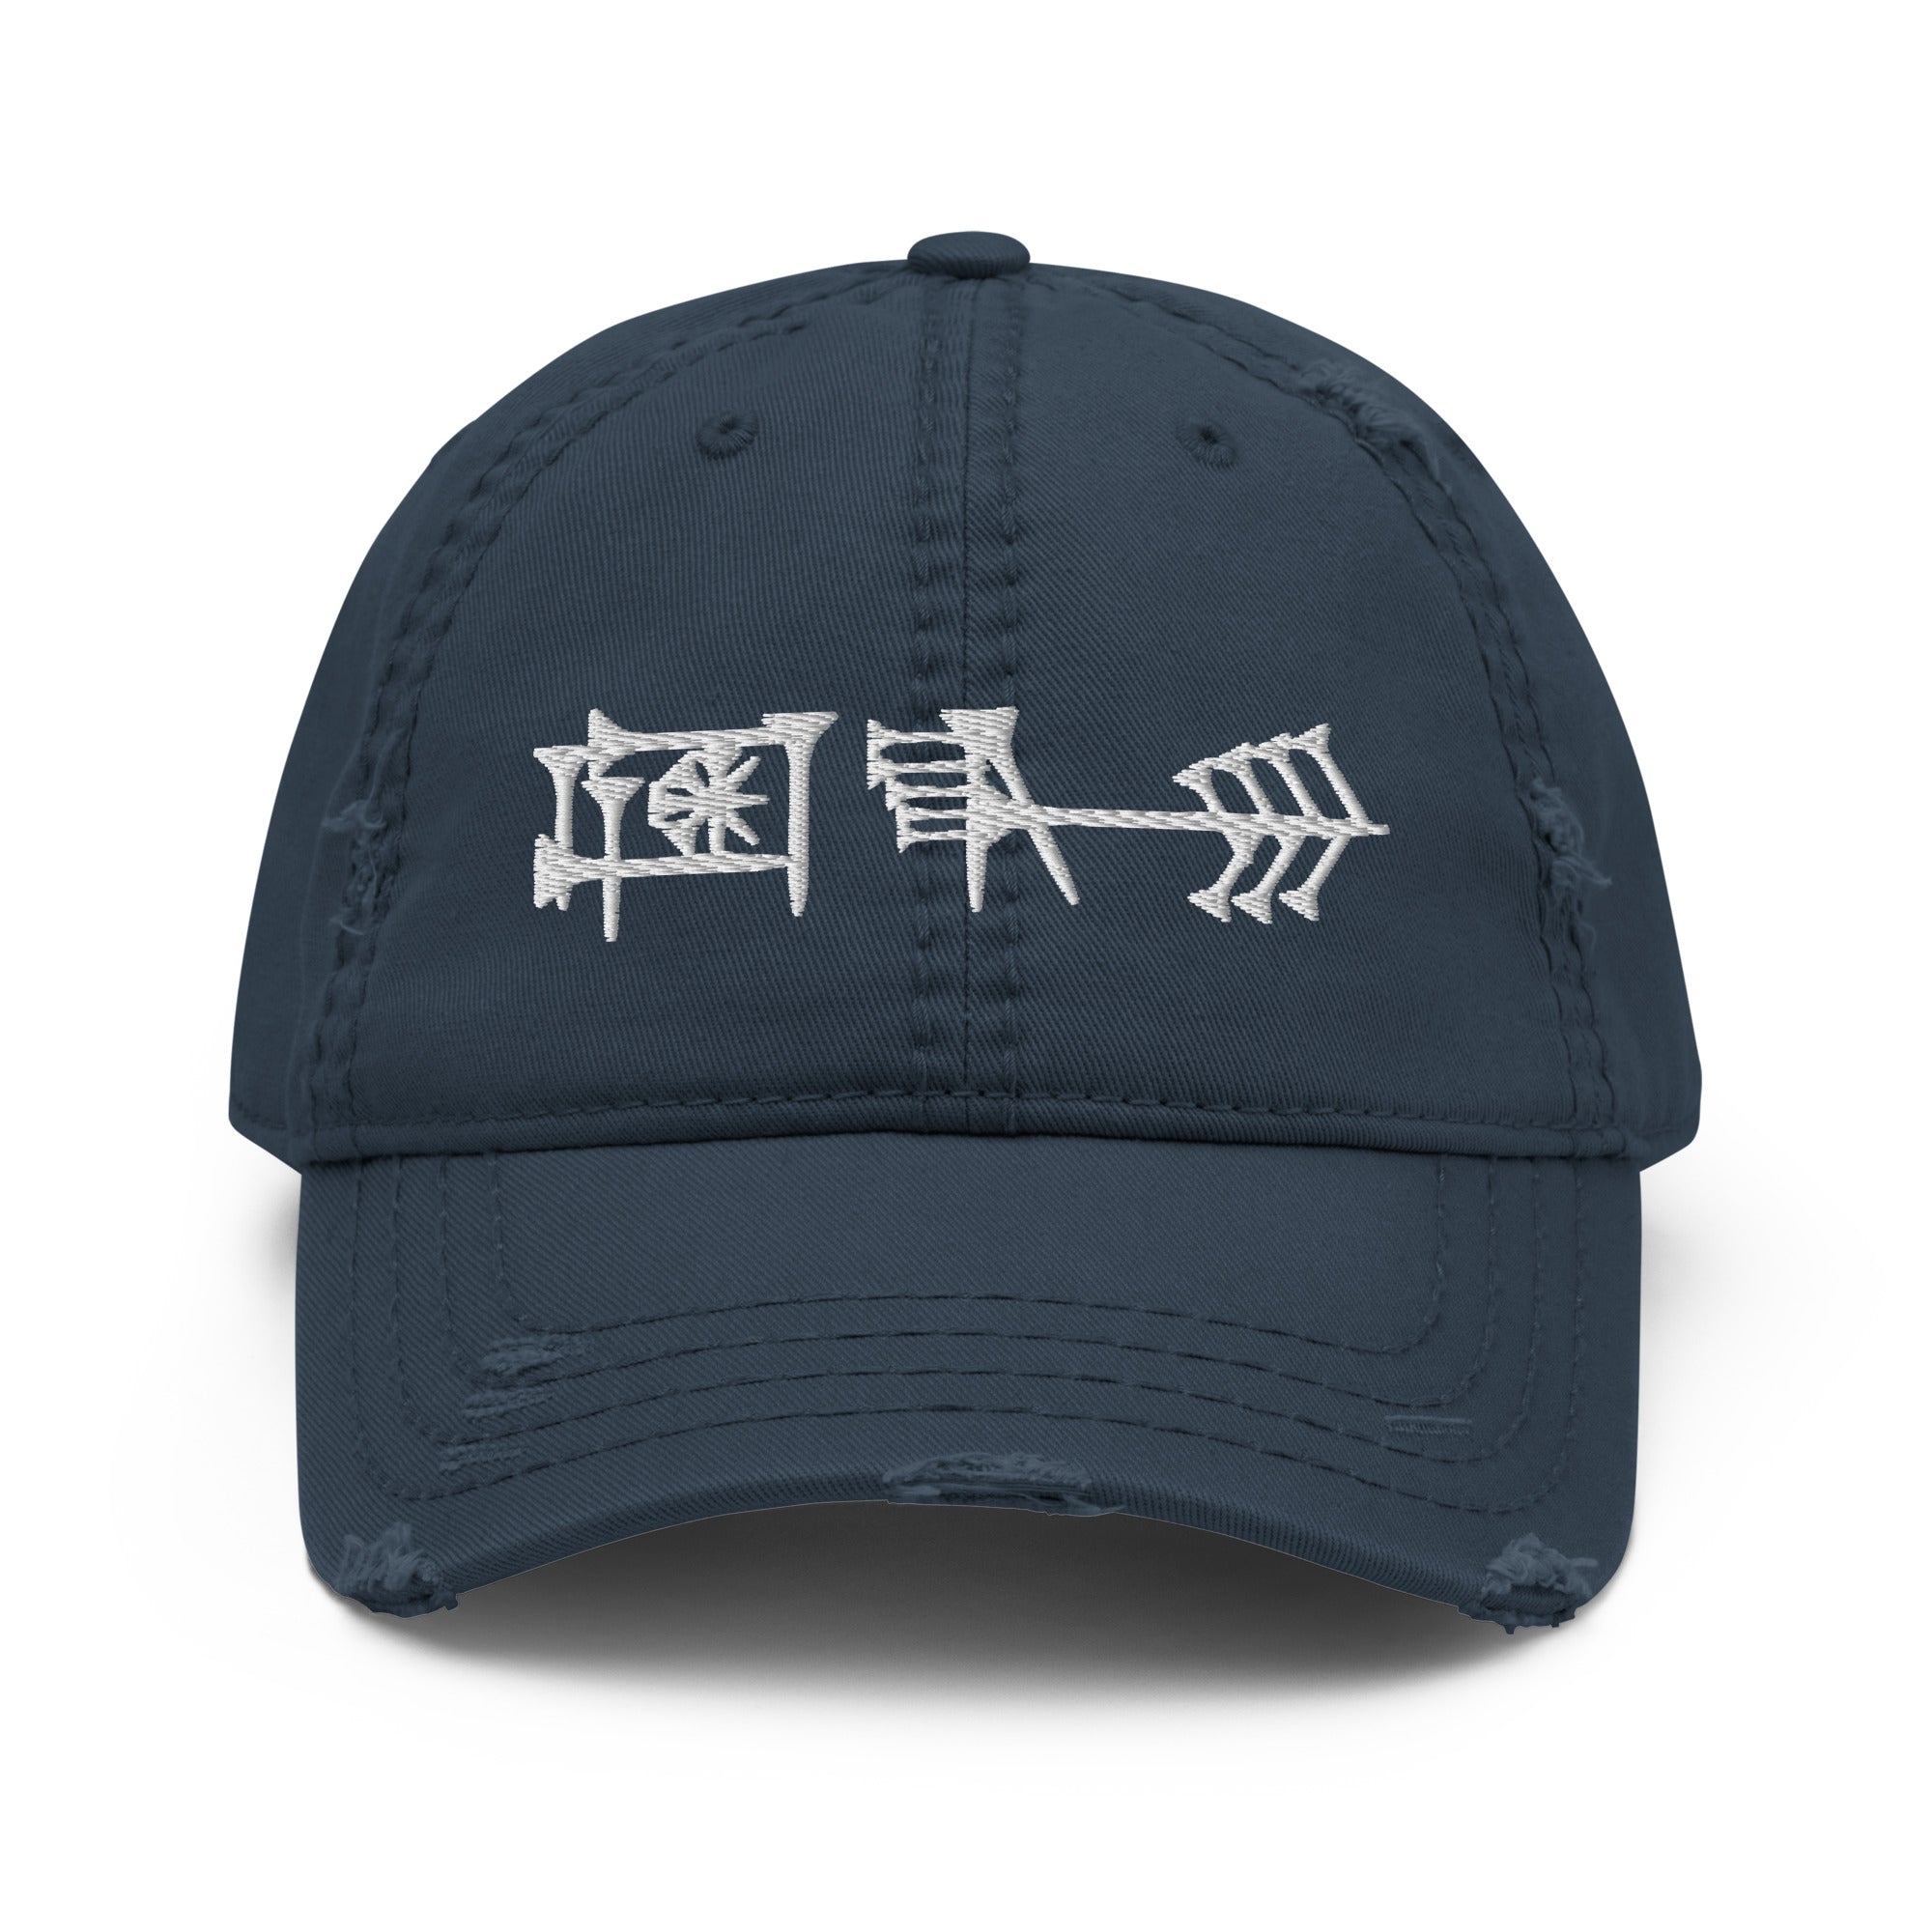 Ama-gi Cuneiform Distressed Hat